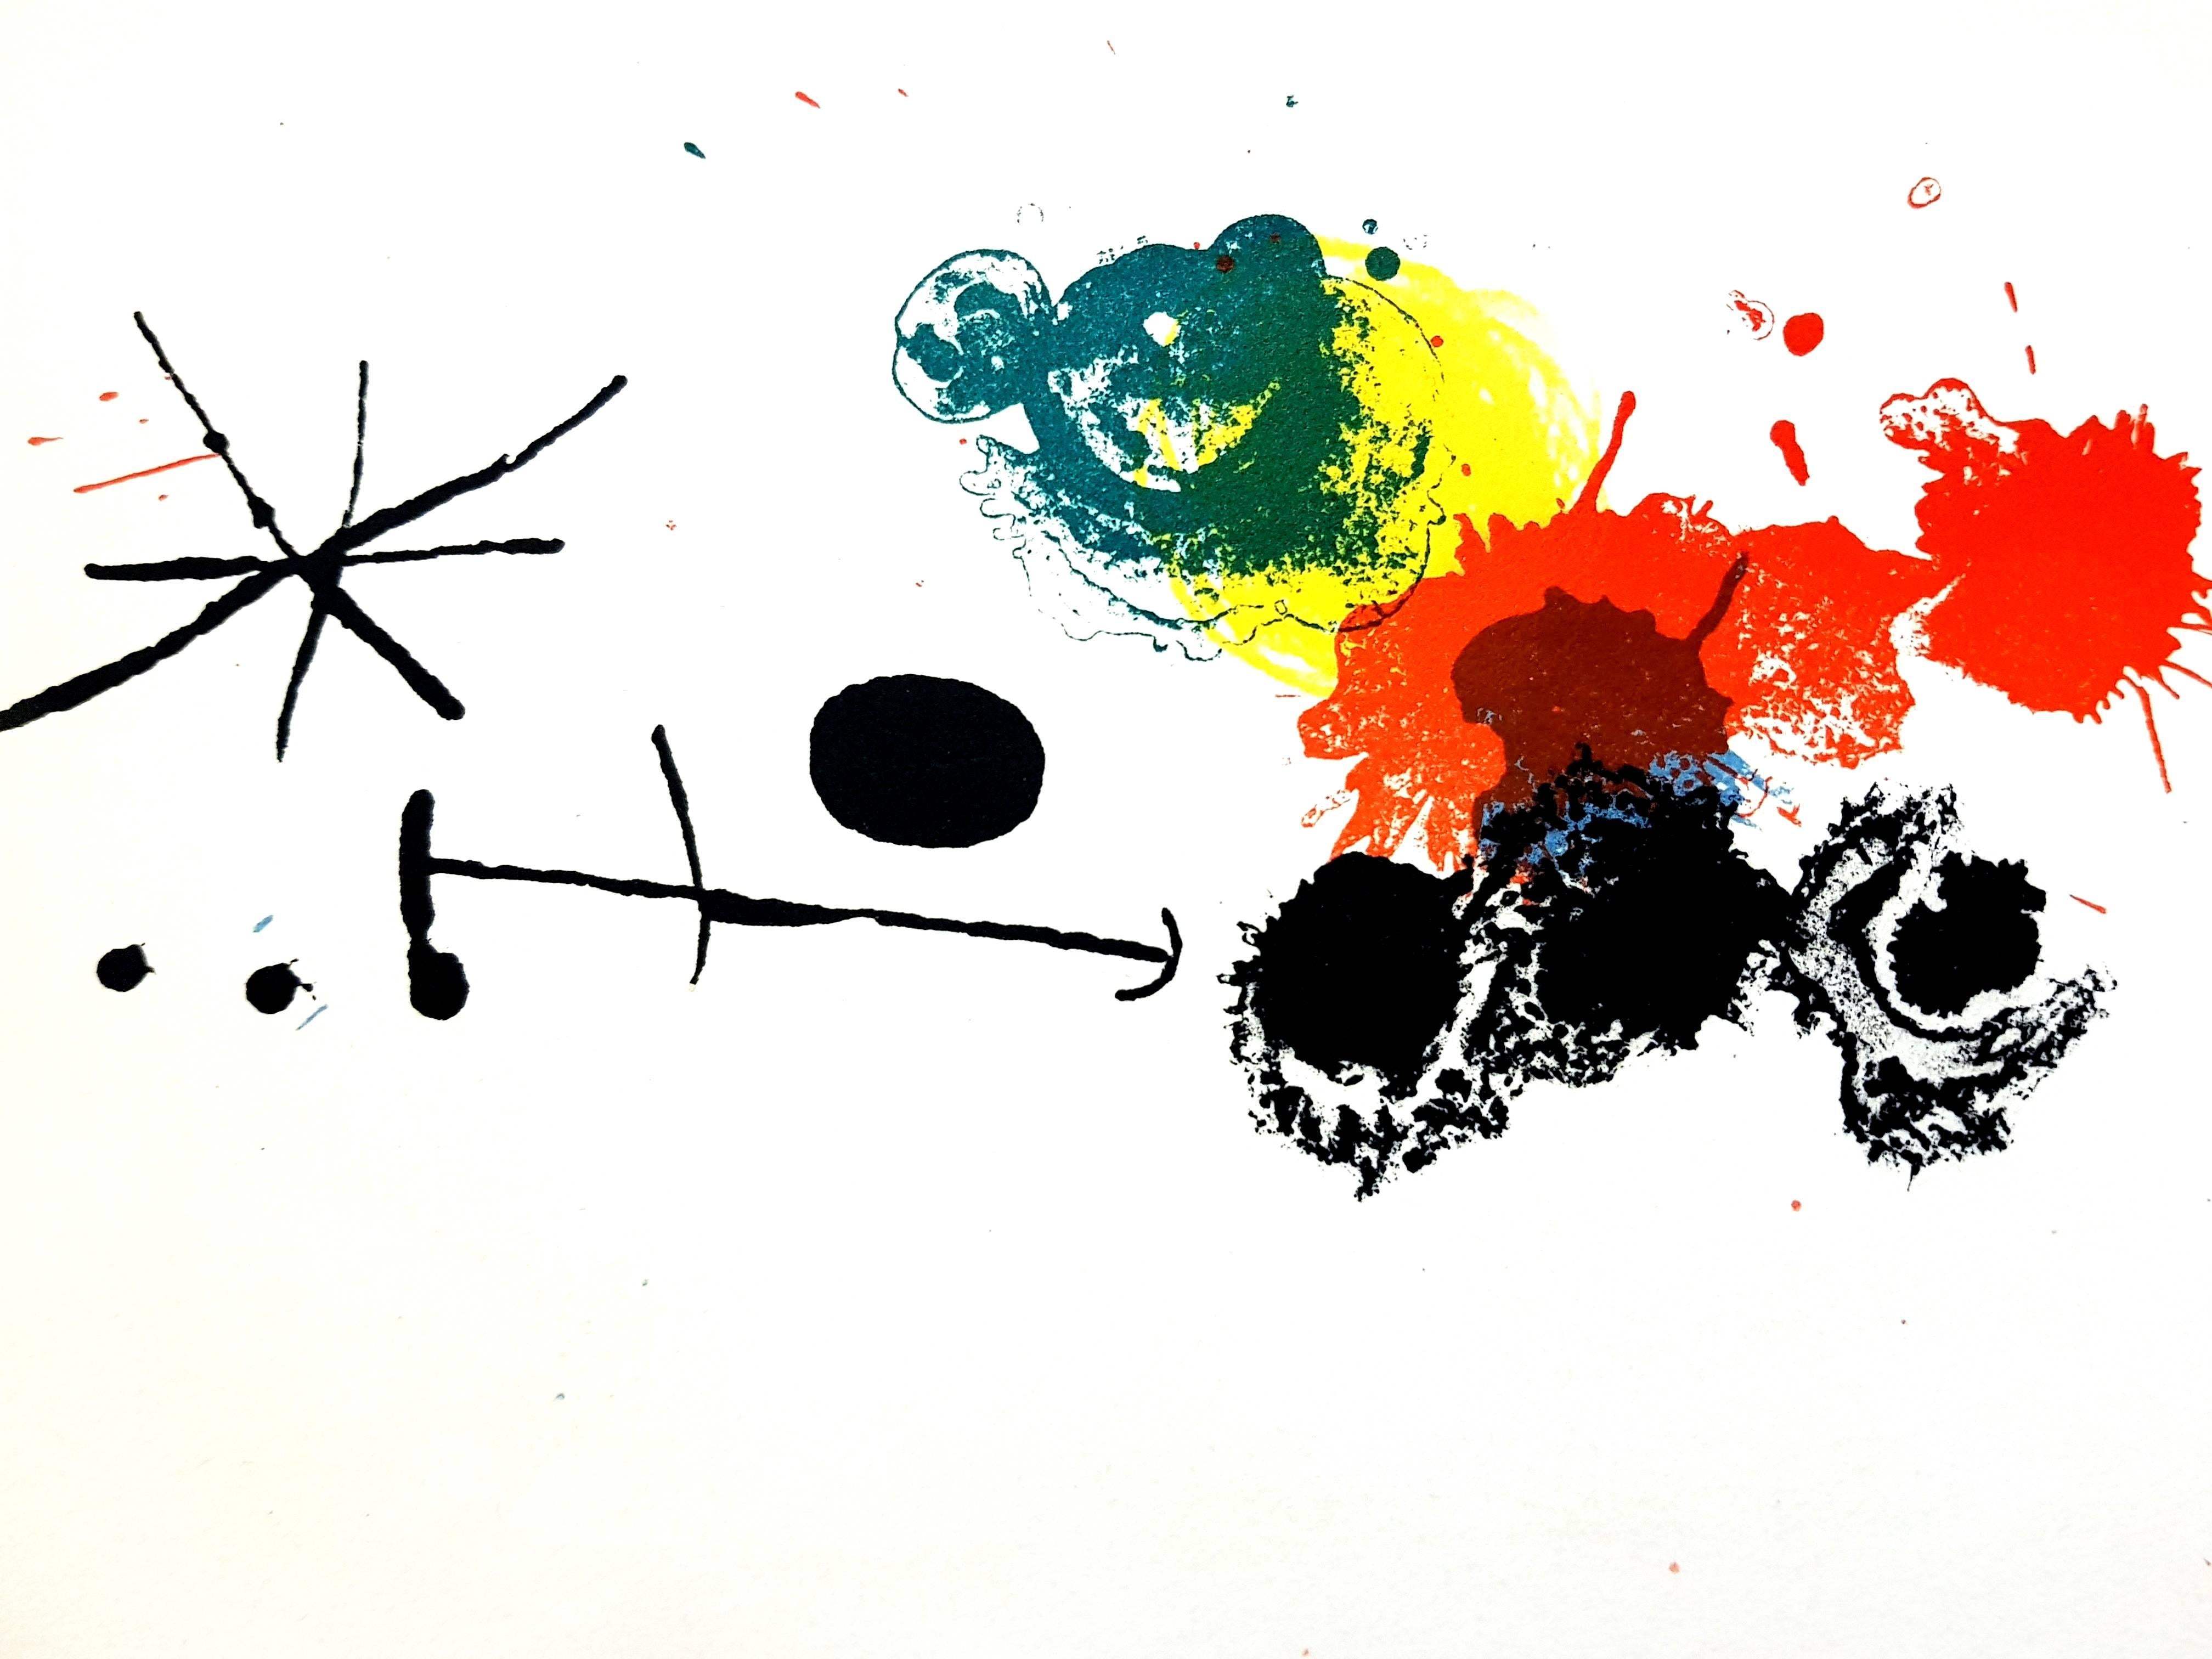 Joan Miro - Abstract Composition - Original Lithograph  - Print by Joan Miró